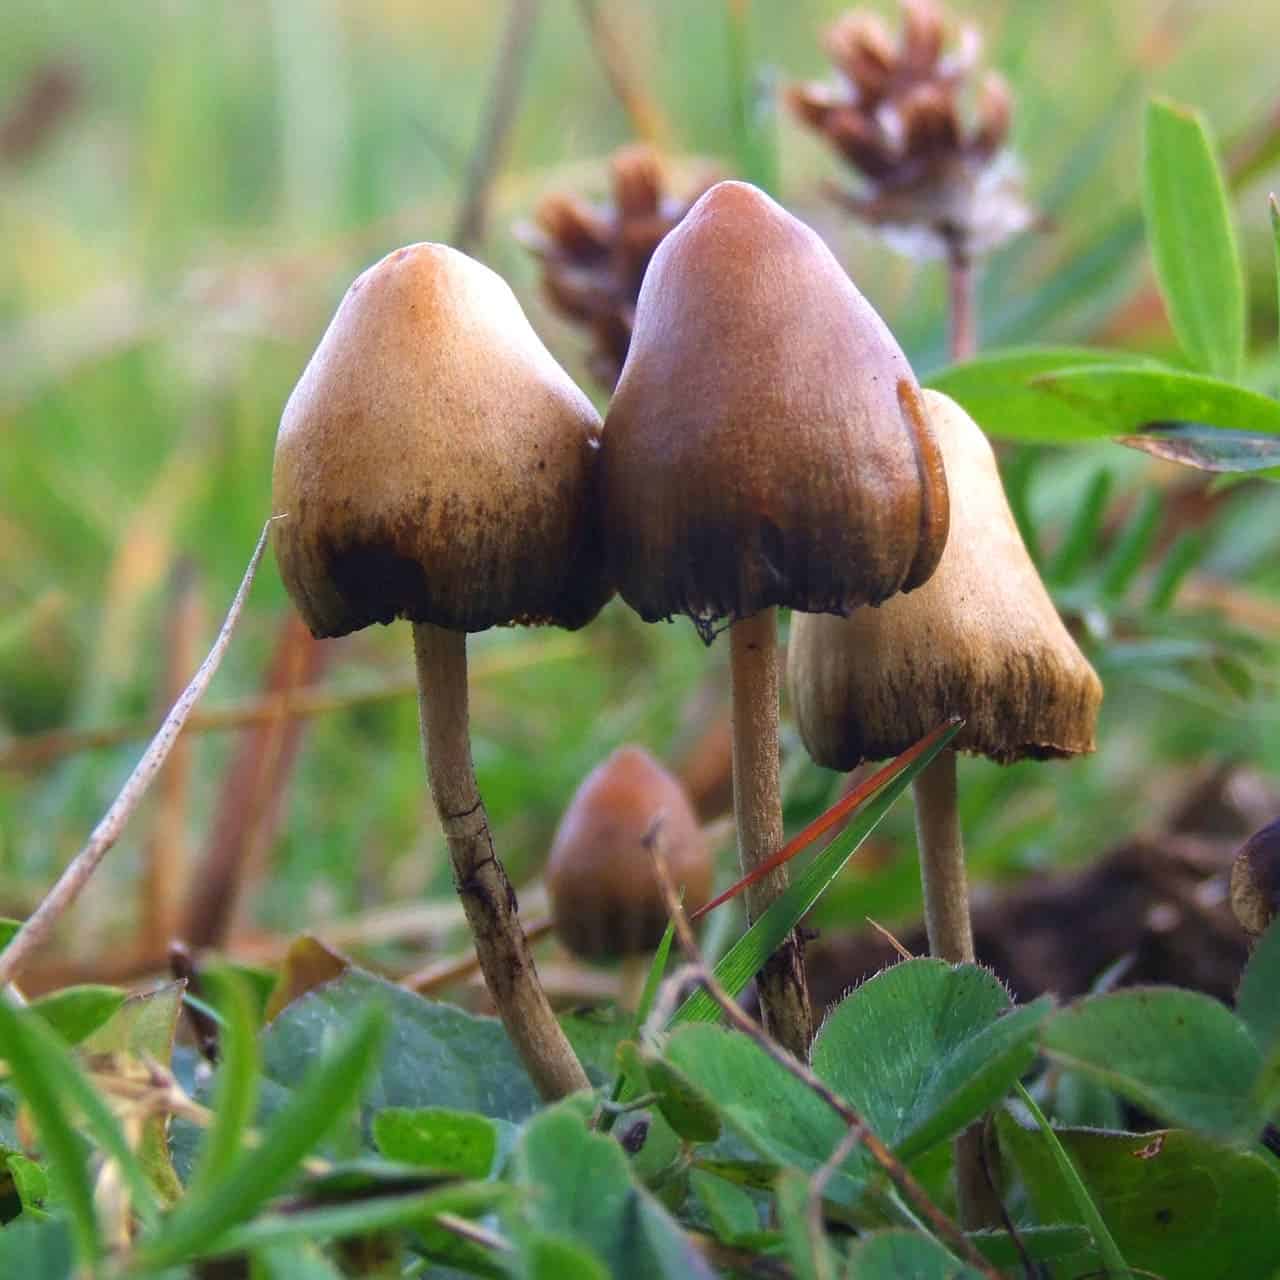 Fruit bodies of the hallucinogenic mushroom Psilocybe semilanceata, photographed in Sweden. Image credits: Arp / Wiki Commons.